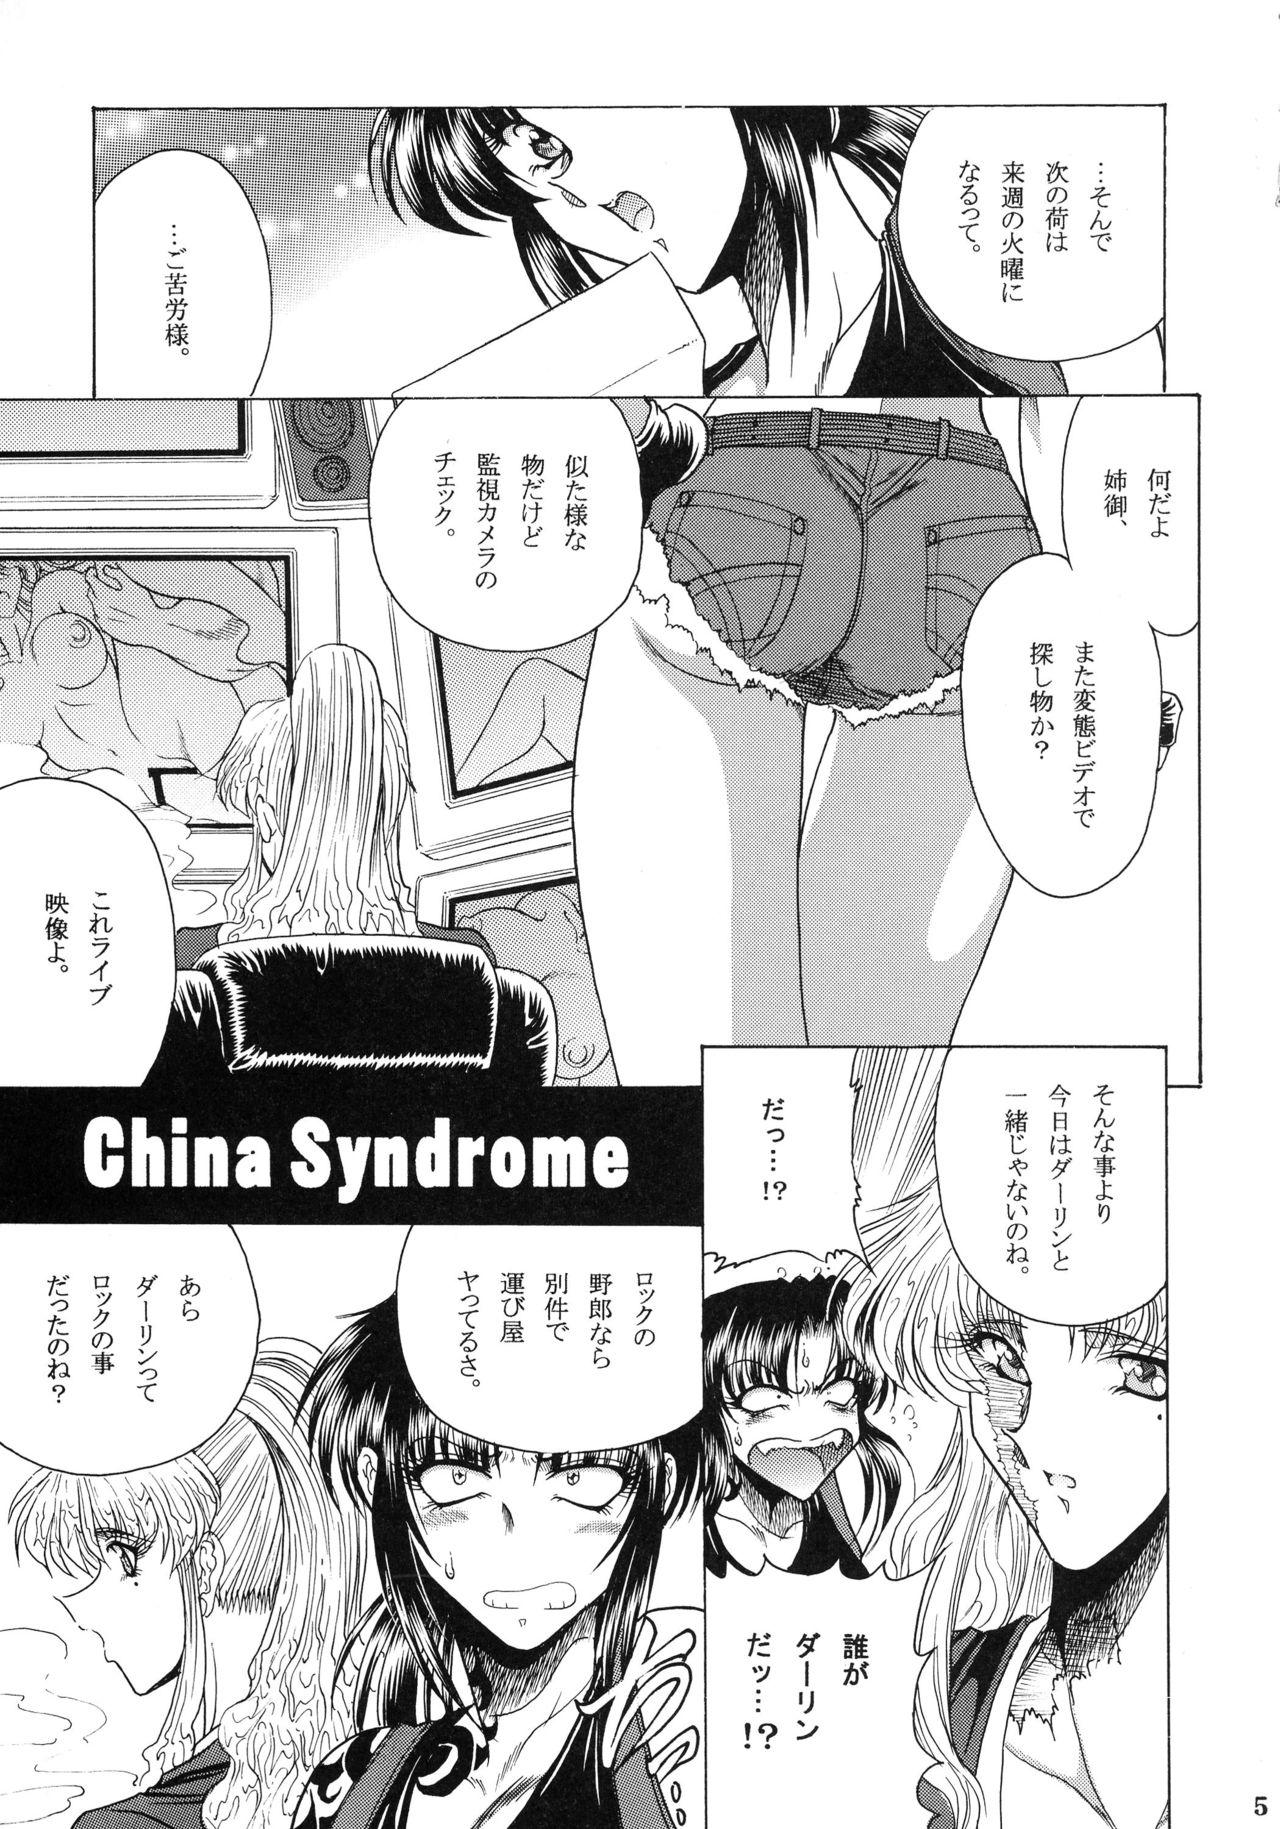 Cream ZONE 38 China Syndrome - Black lagoon Kitchen - Page 4